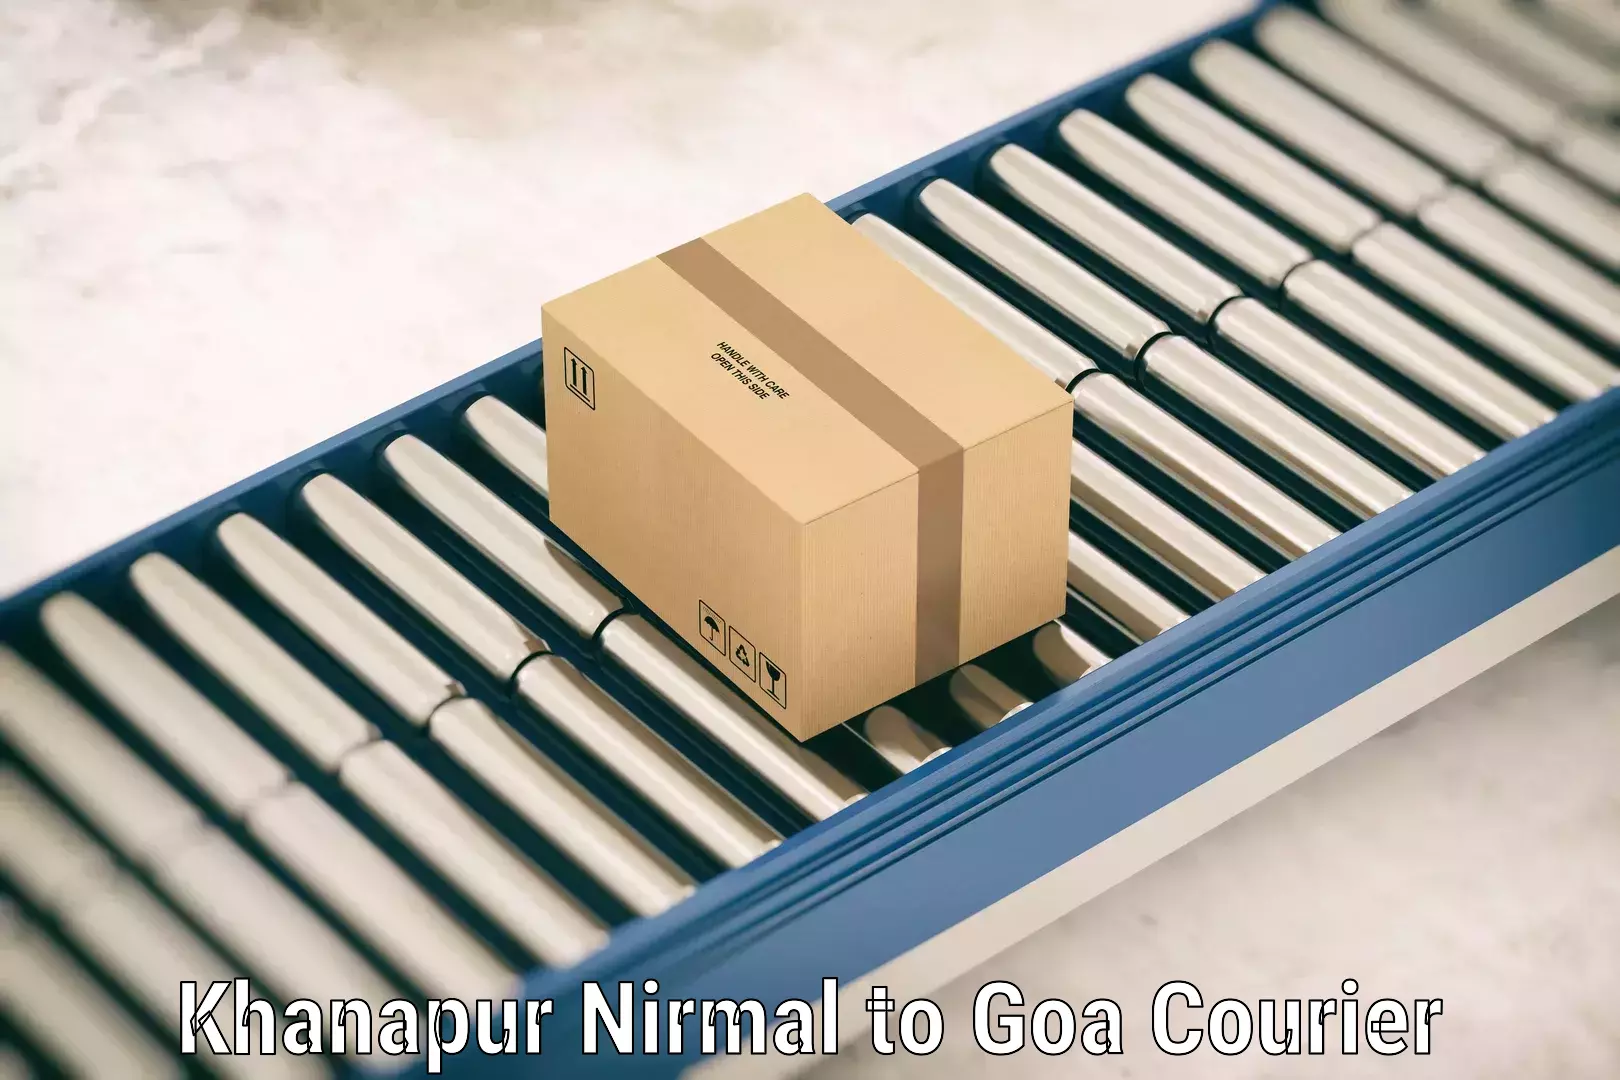 Personal effects shipping in Khanapur Nirmal to Vasco da Gama